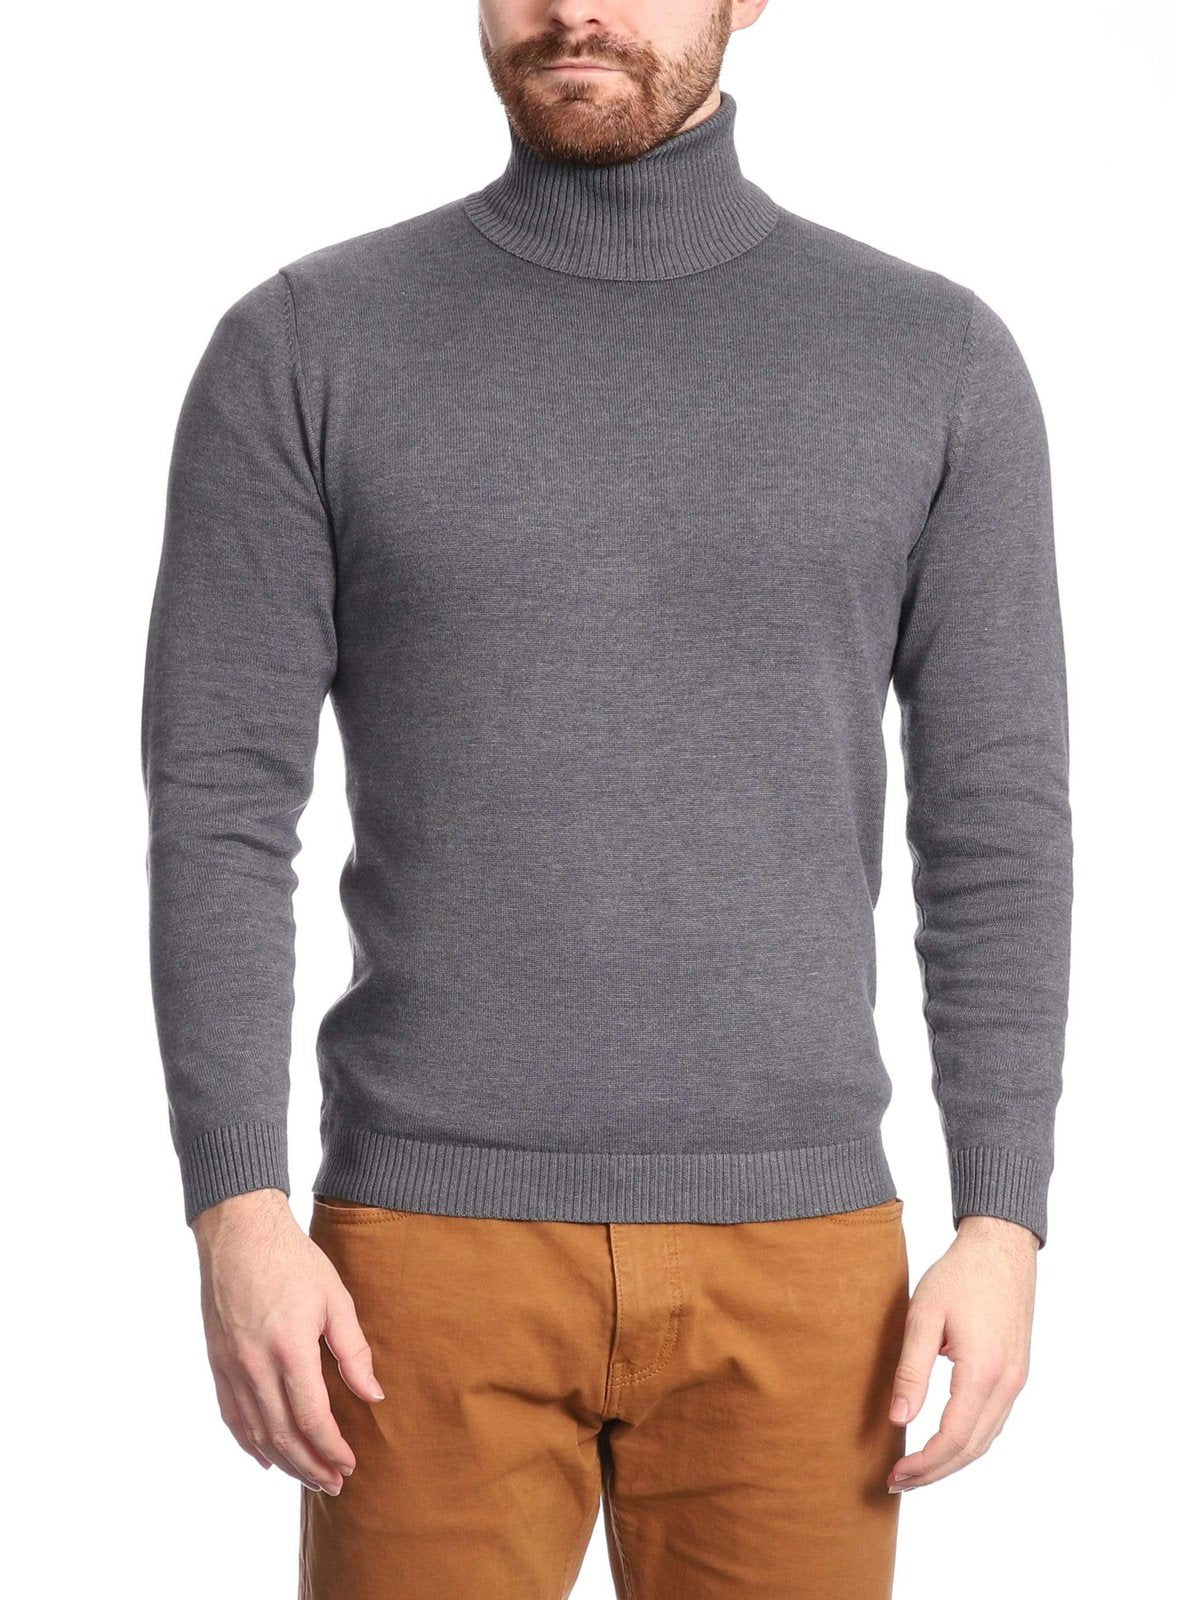 Arthur Black Default Category Migrated Gray / M Arthur Black Men's Solid Gray Pullover Cotton Blend Turtleneck Sweater Shirt